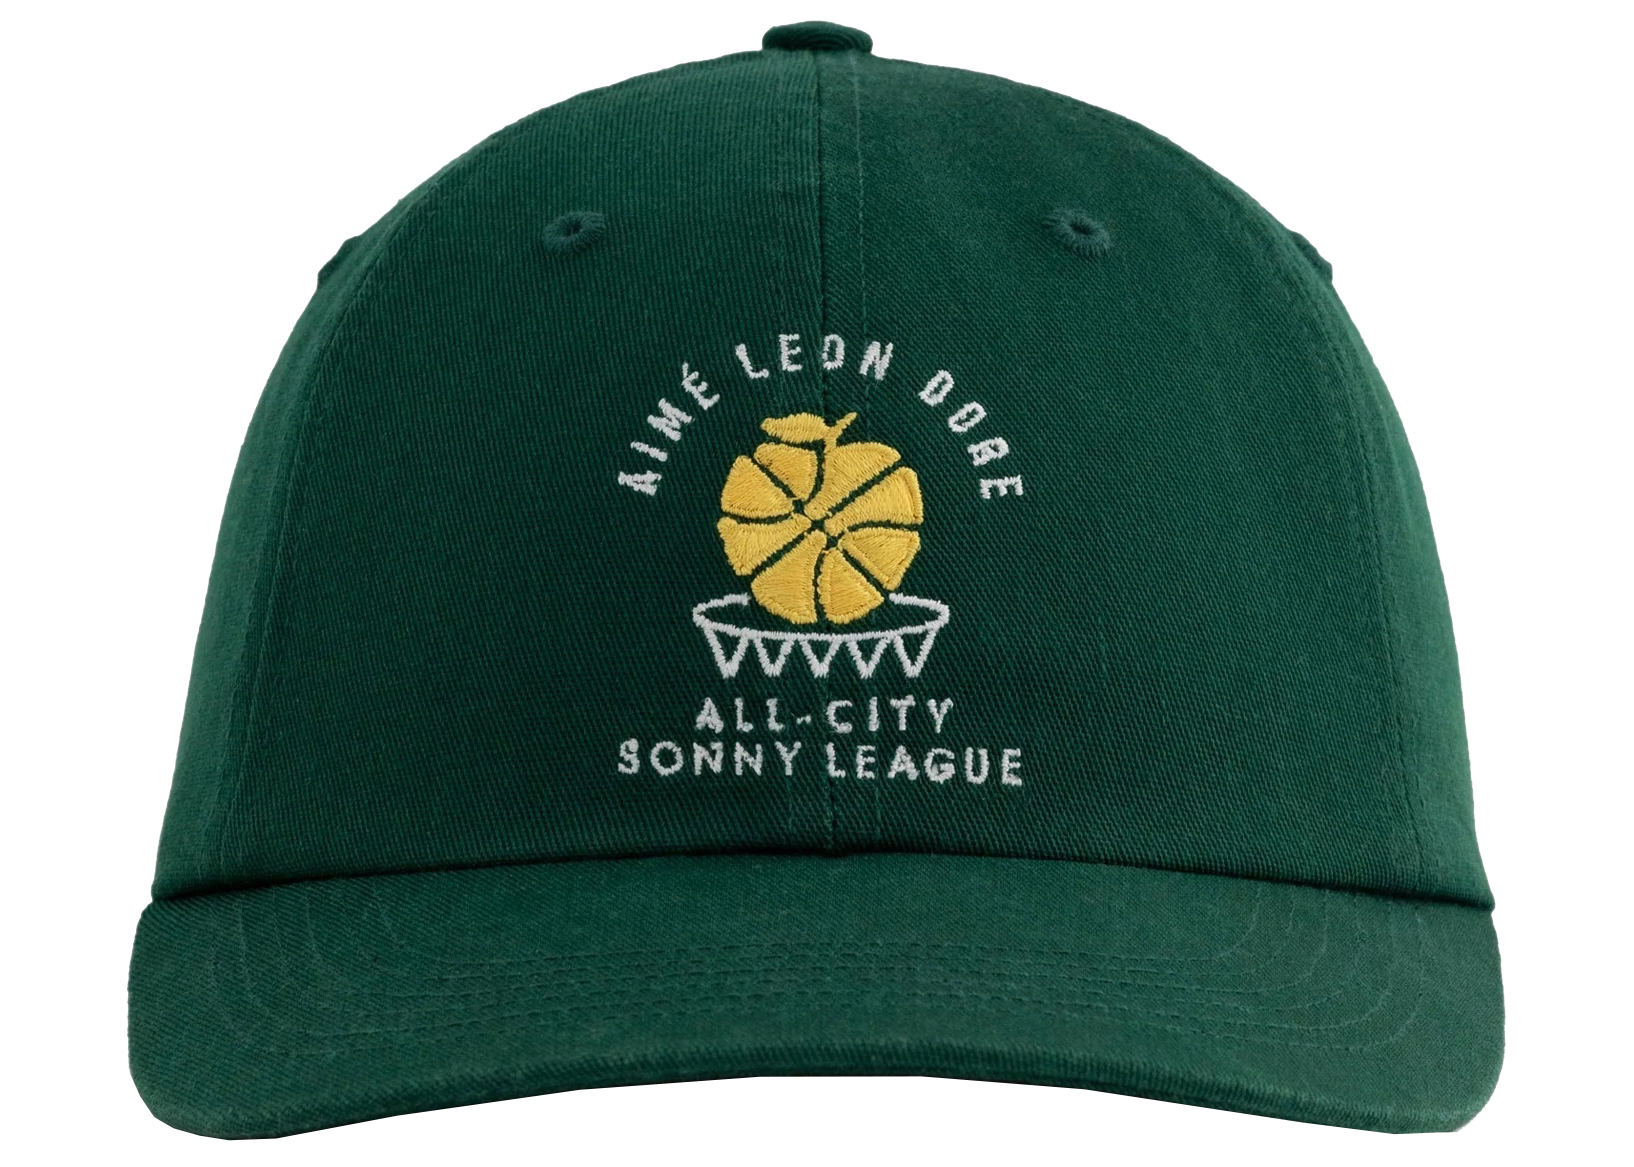 Aime Leon Dore x New Balance SONNY League Hat Green - SS22 - US